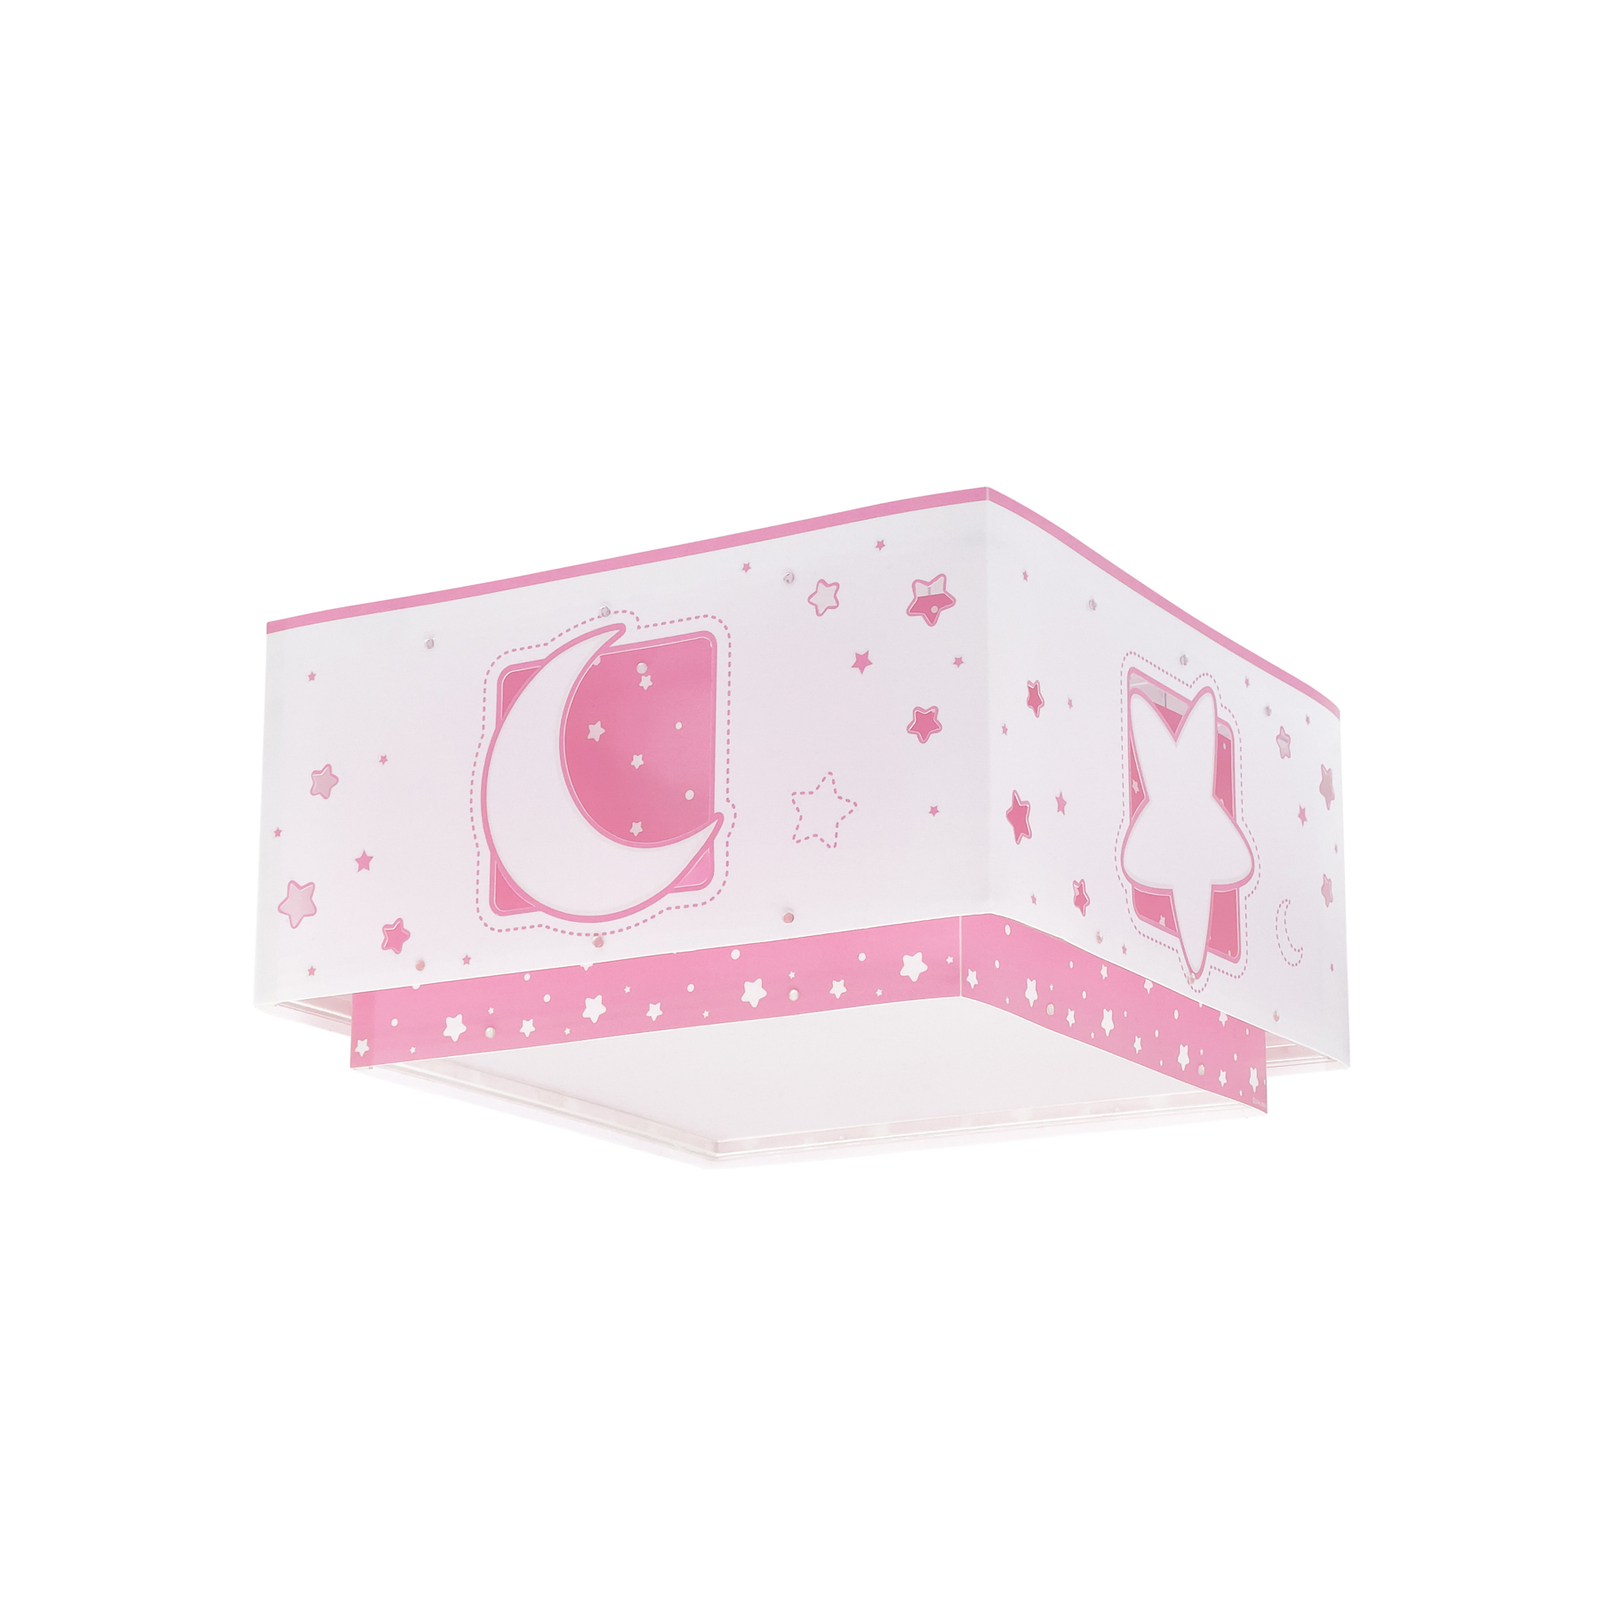 Dalber Moonlight Kinder-Deckenlampe 1-flammig pink